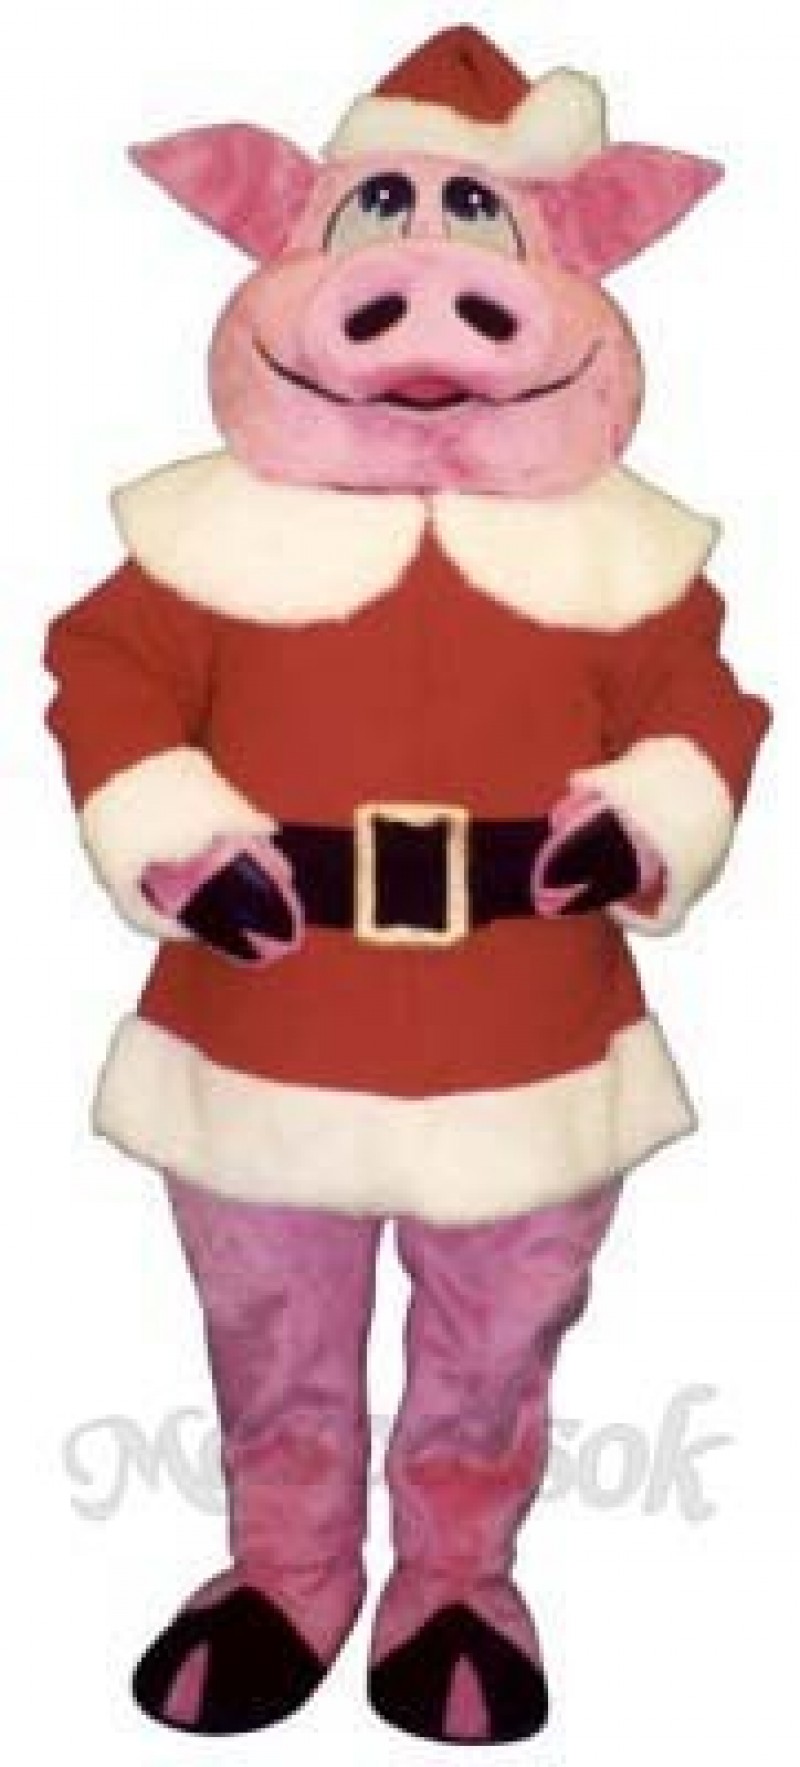 Hog with Santa Coat & Hat Christmas Mascot Costume